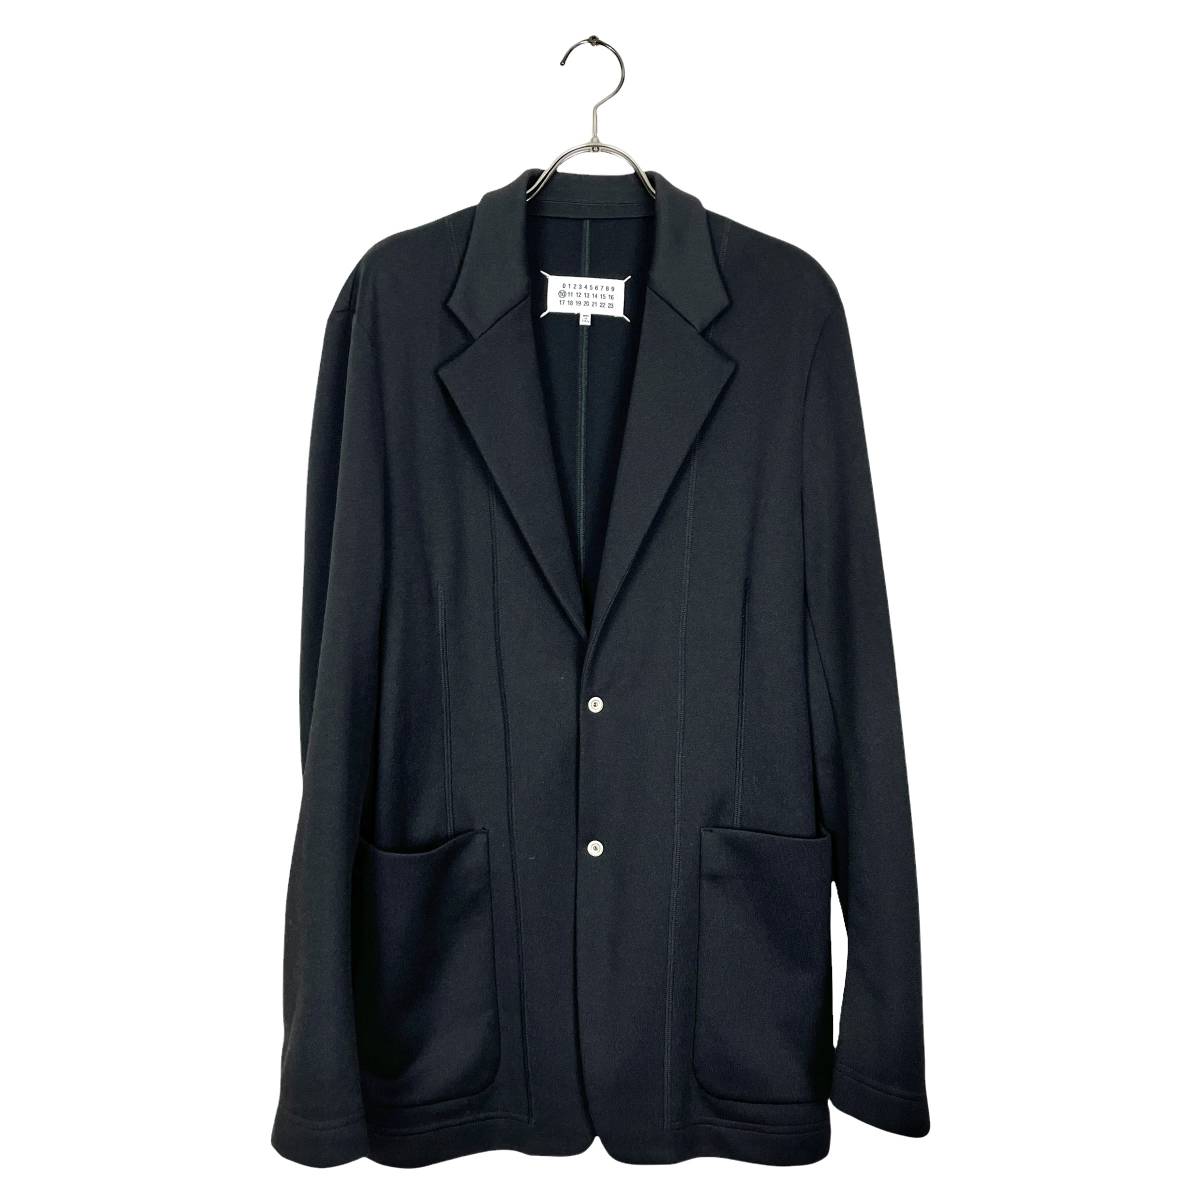 Maison Margiela(メゾン マルジェラ) wool shirt jacket 2020SS (black